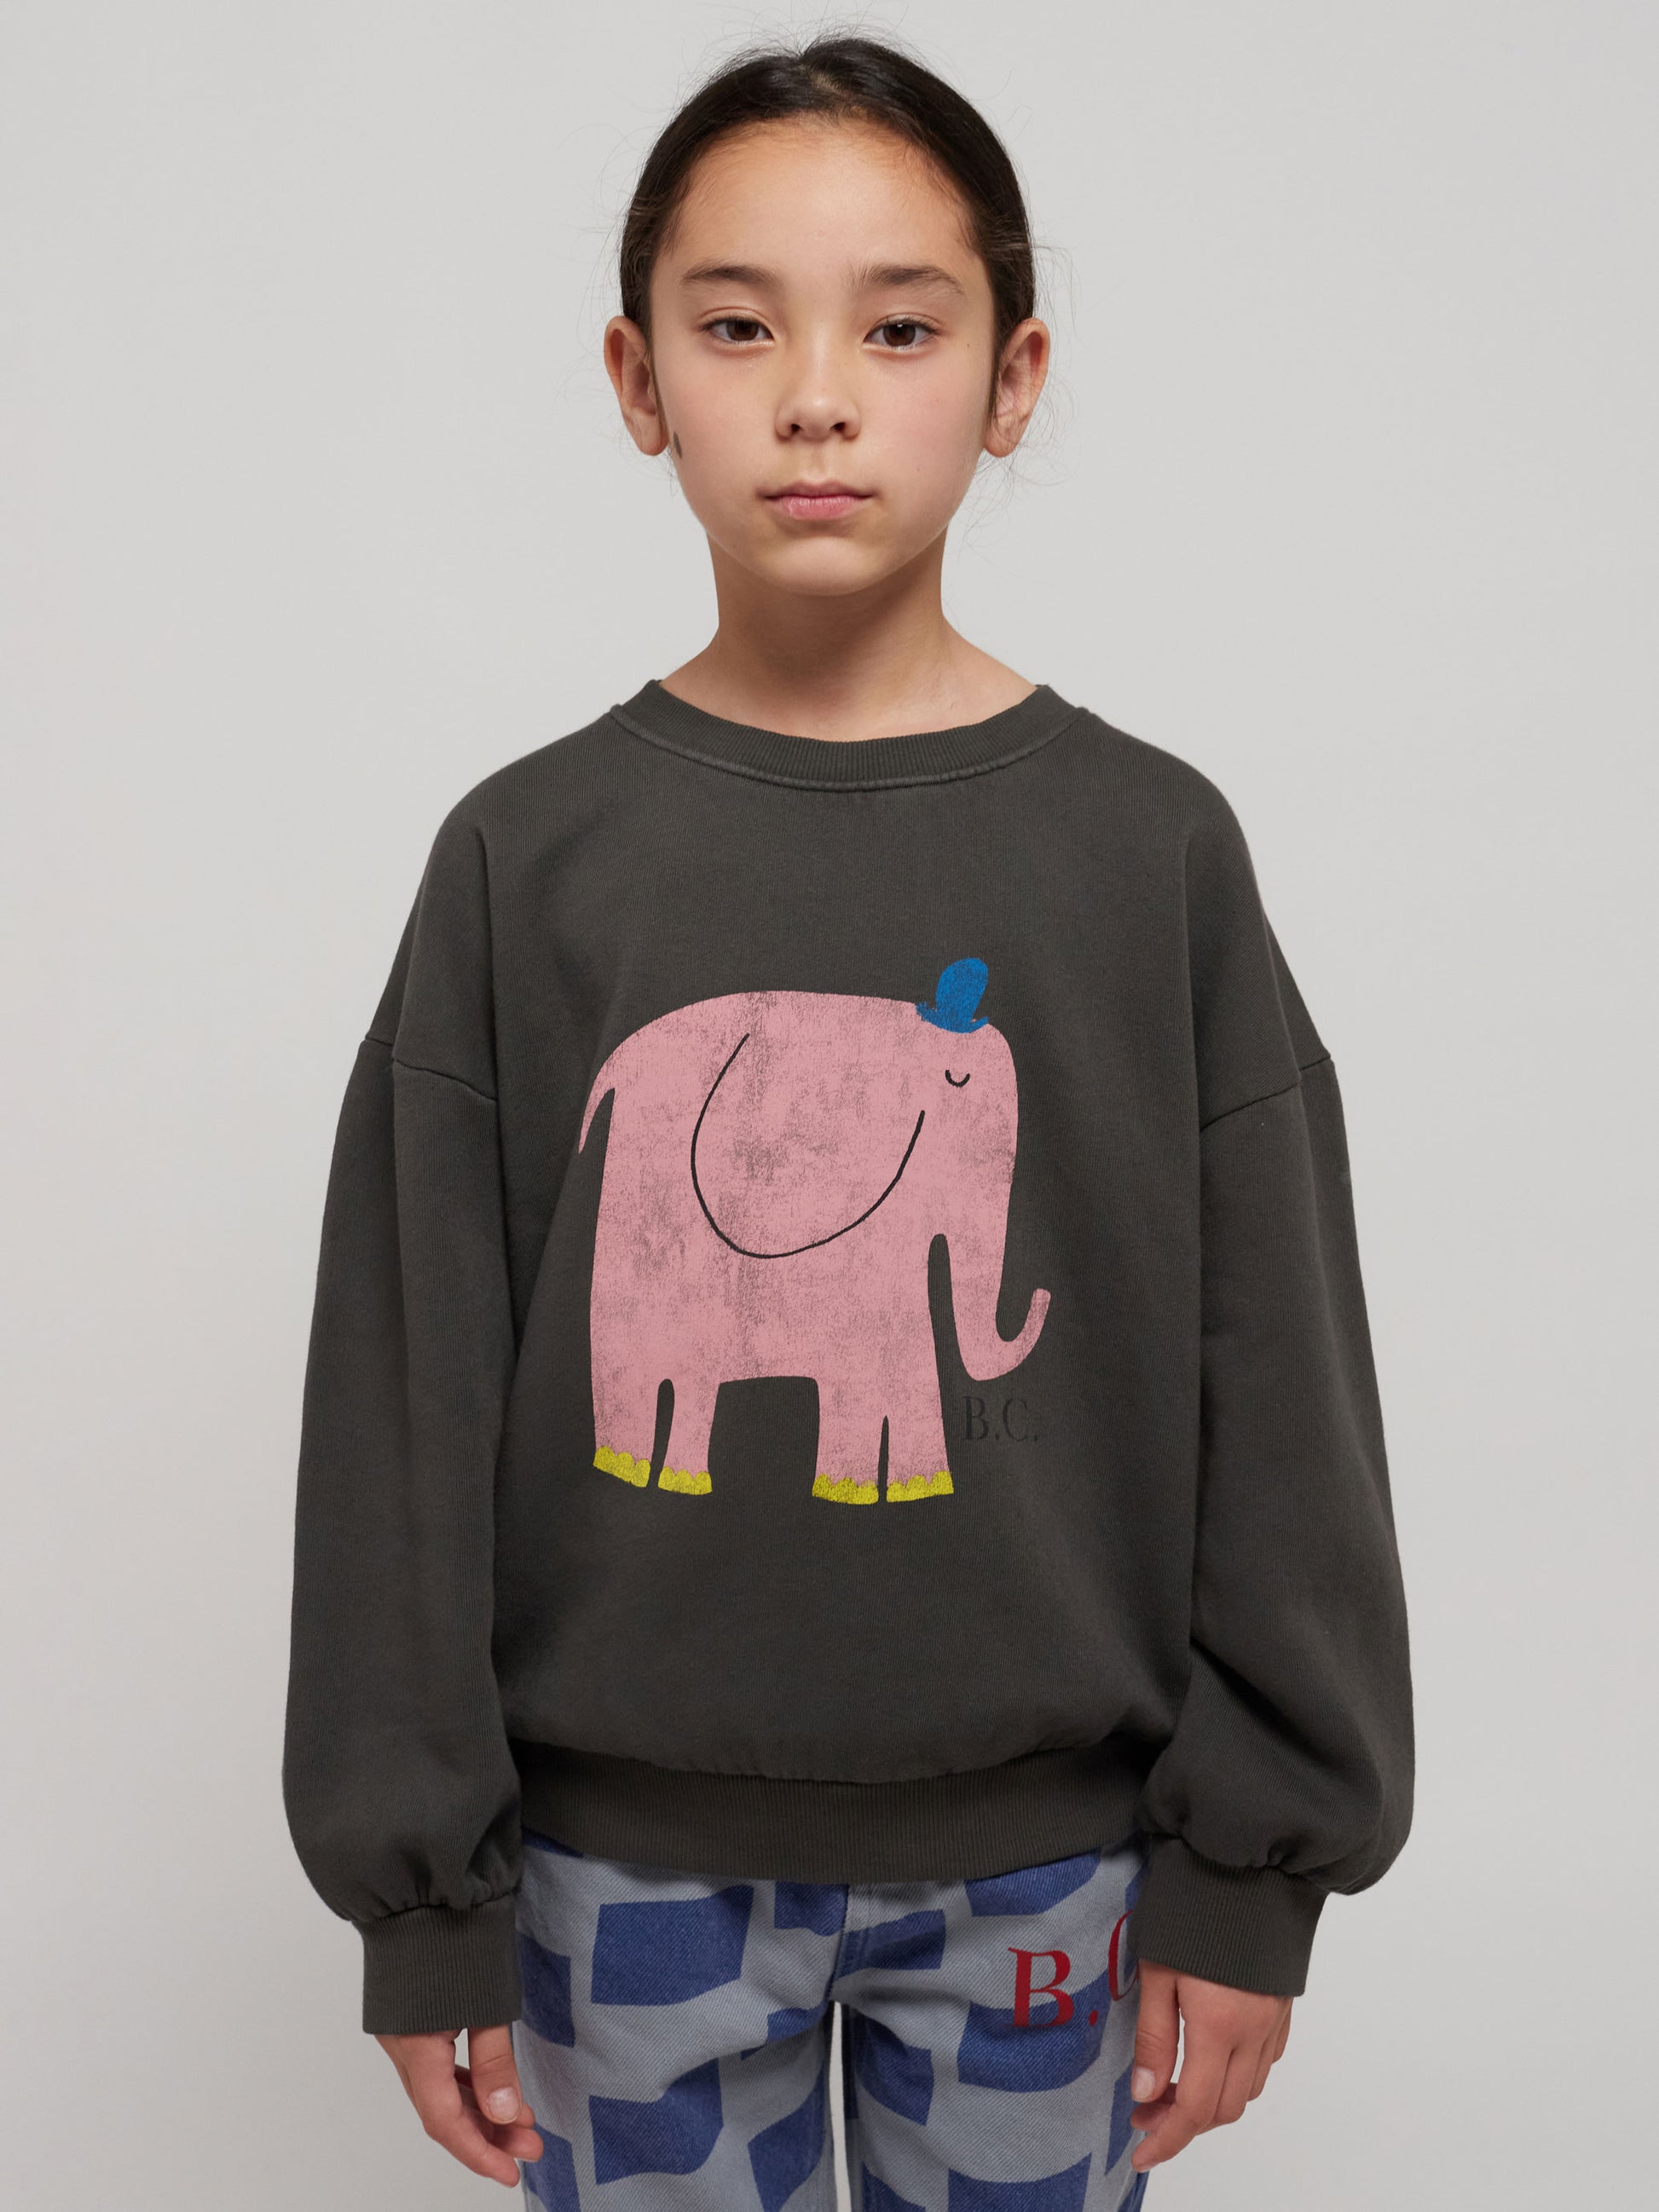 The Bobo Choses sweatshirt – Elephant